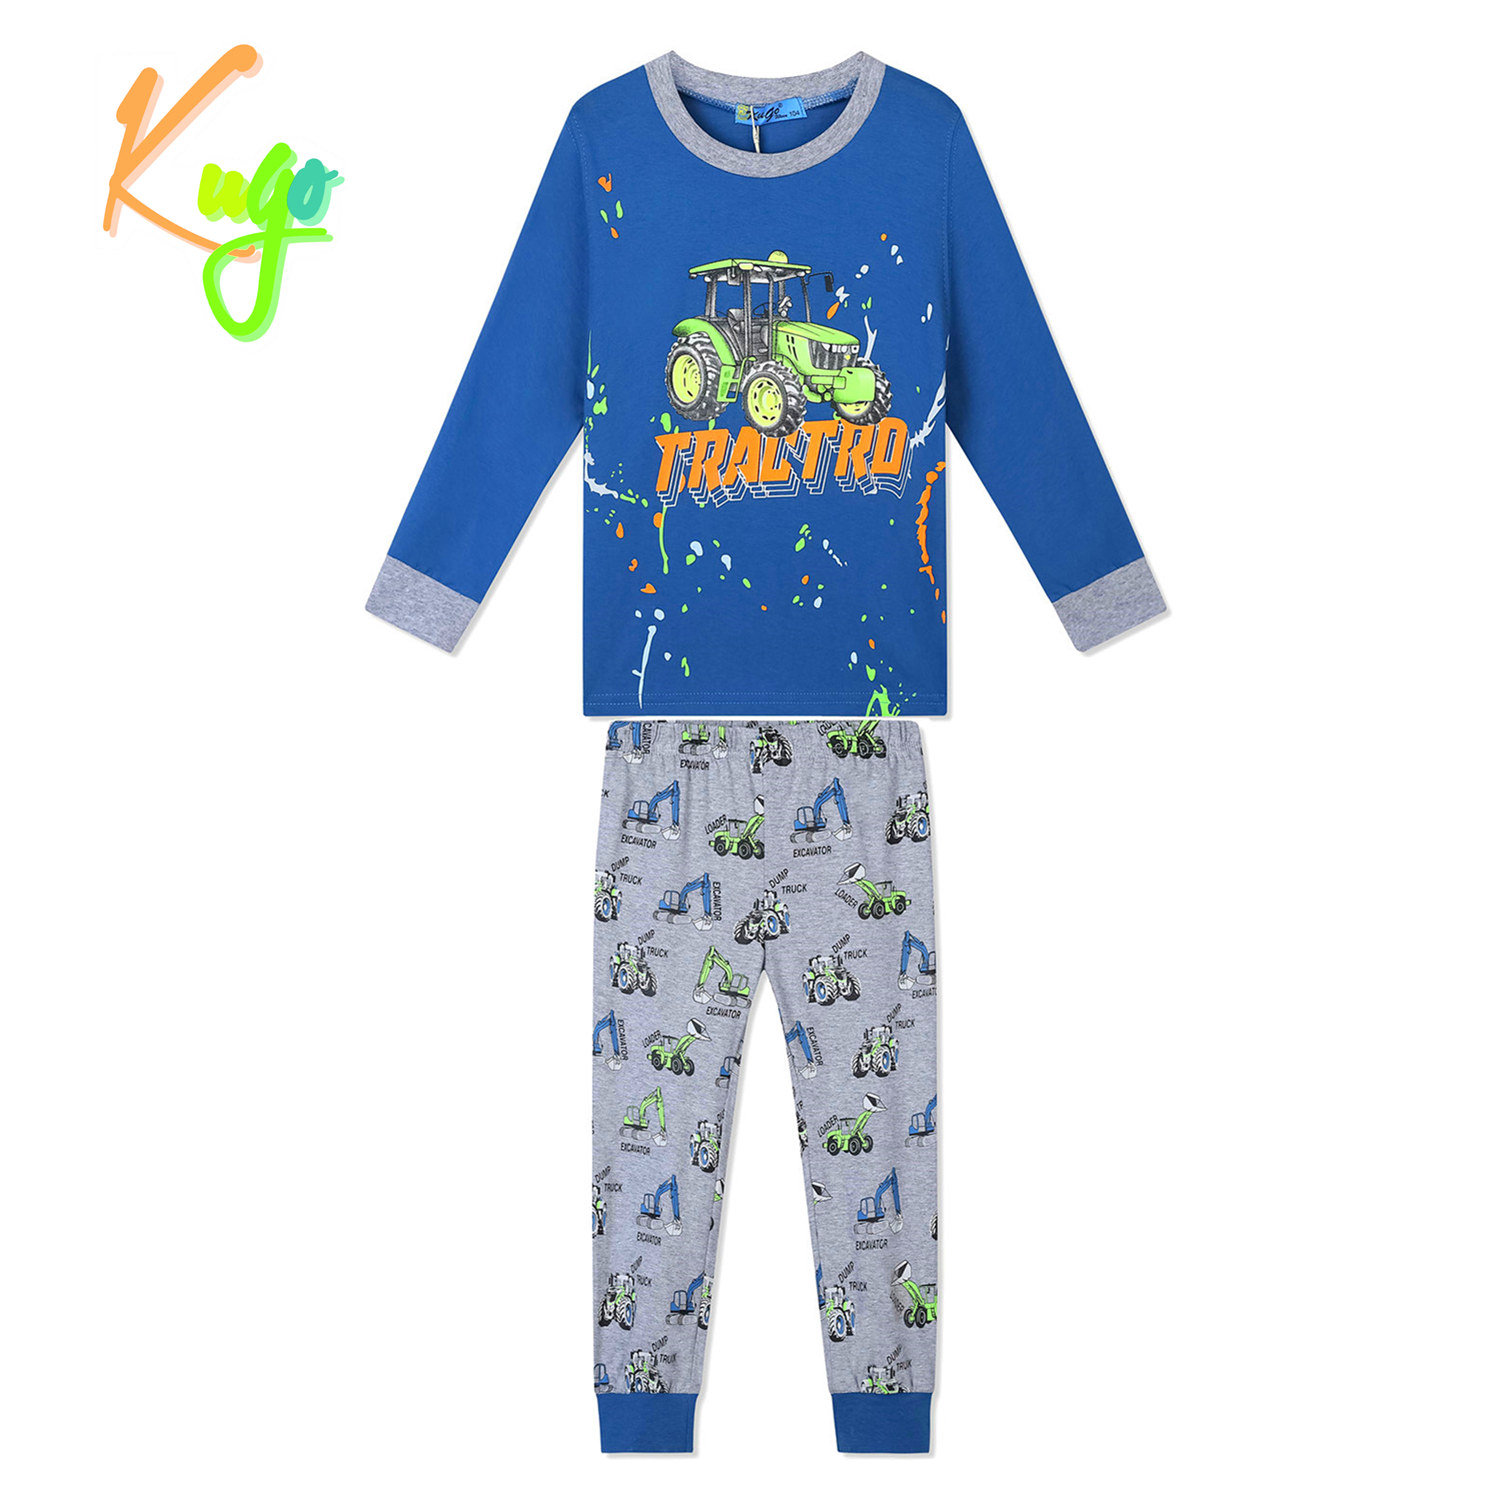 Chlapecké pyžamo - KUGO MP1336, petrol / šedá Barva: Petrol, Velikost: 128